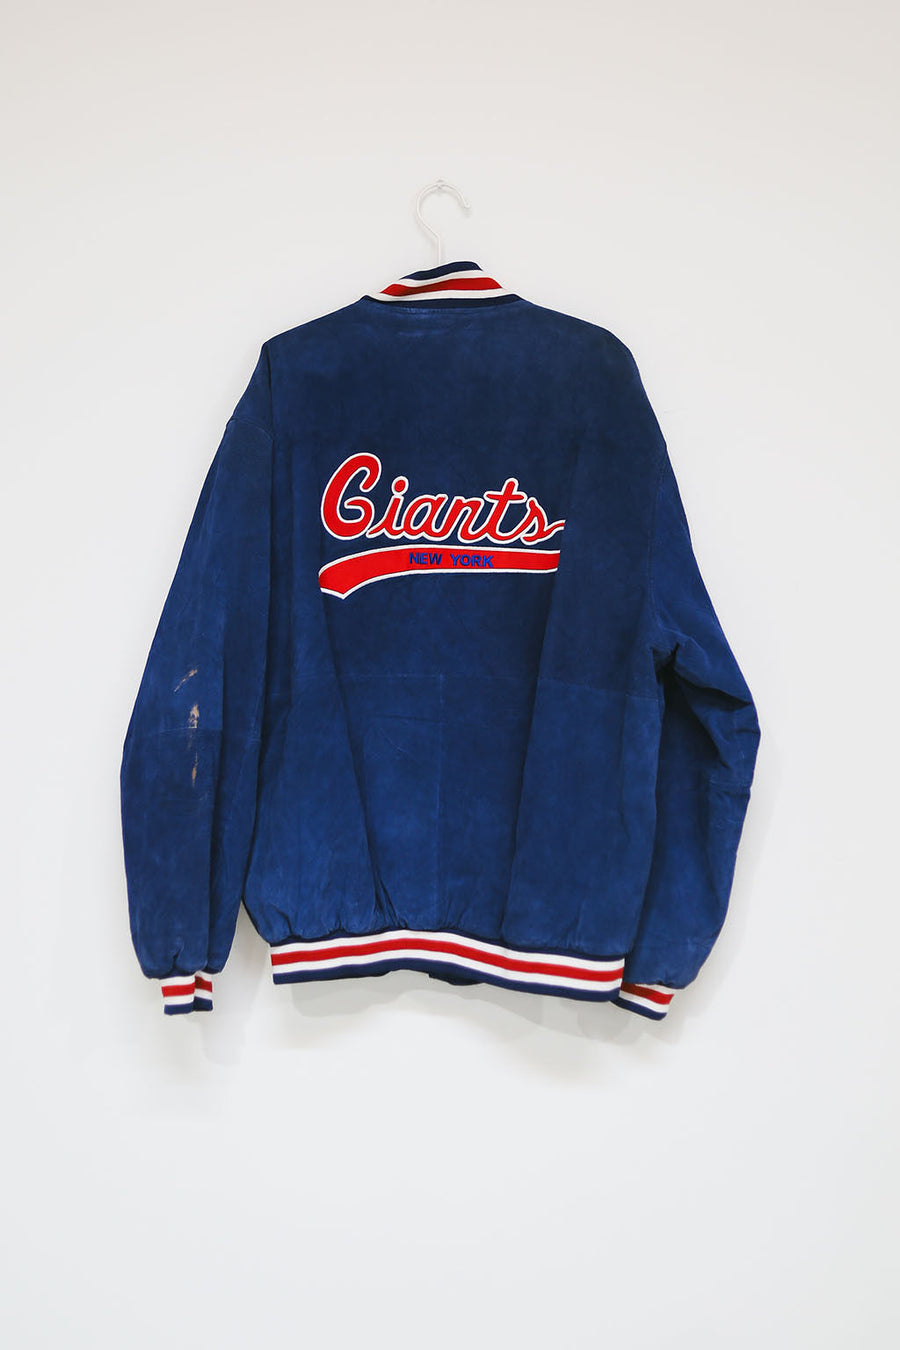 Giants Jacket by Luna B Vintage